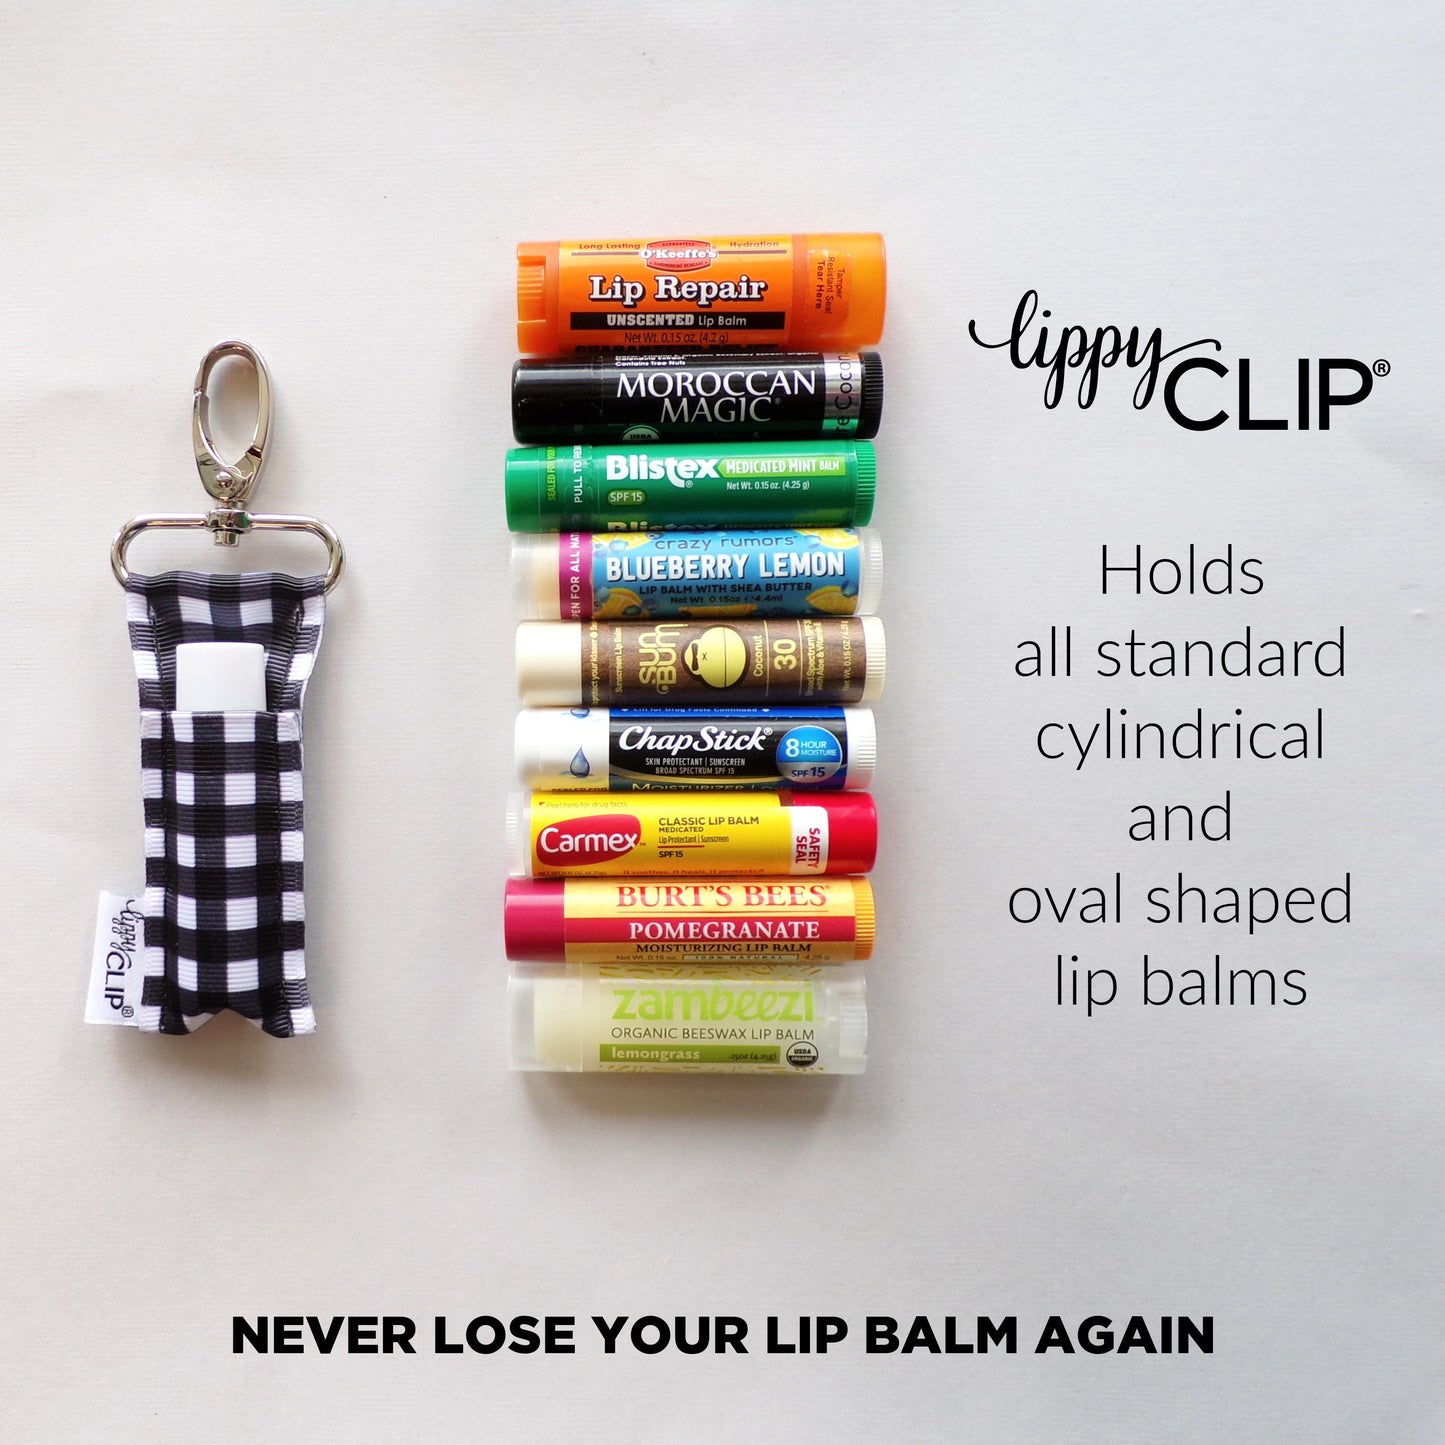 Floral Cow LippyClip® Lip Balm Holder